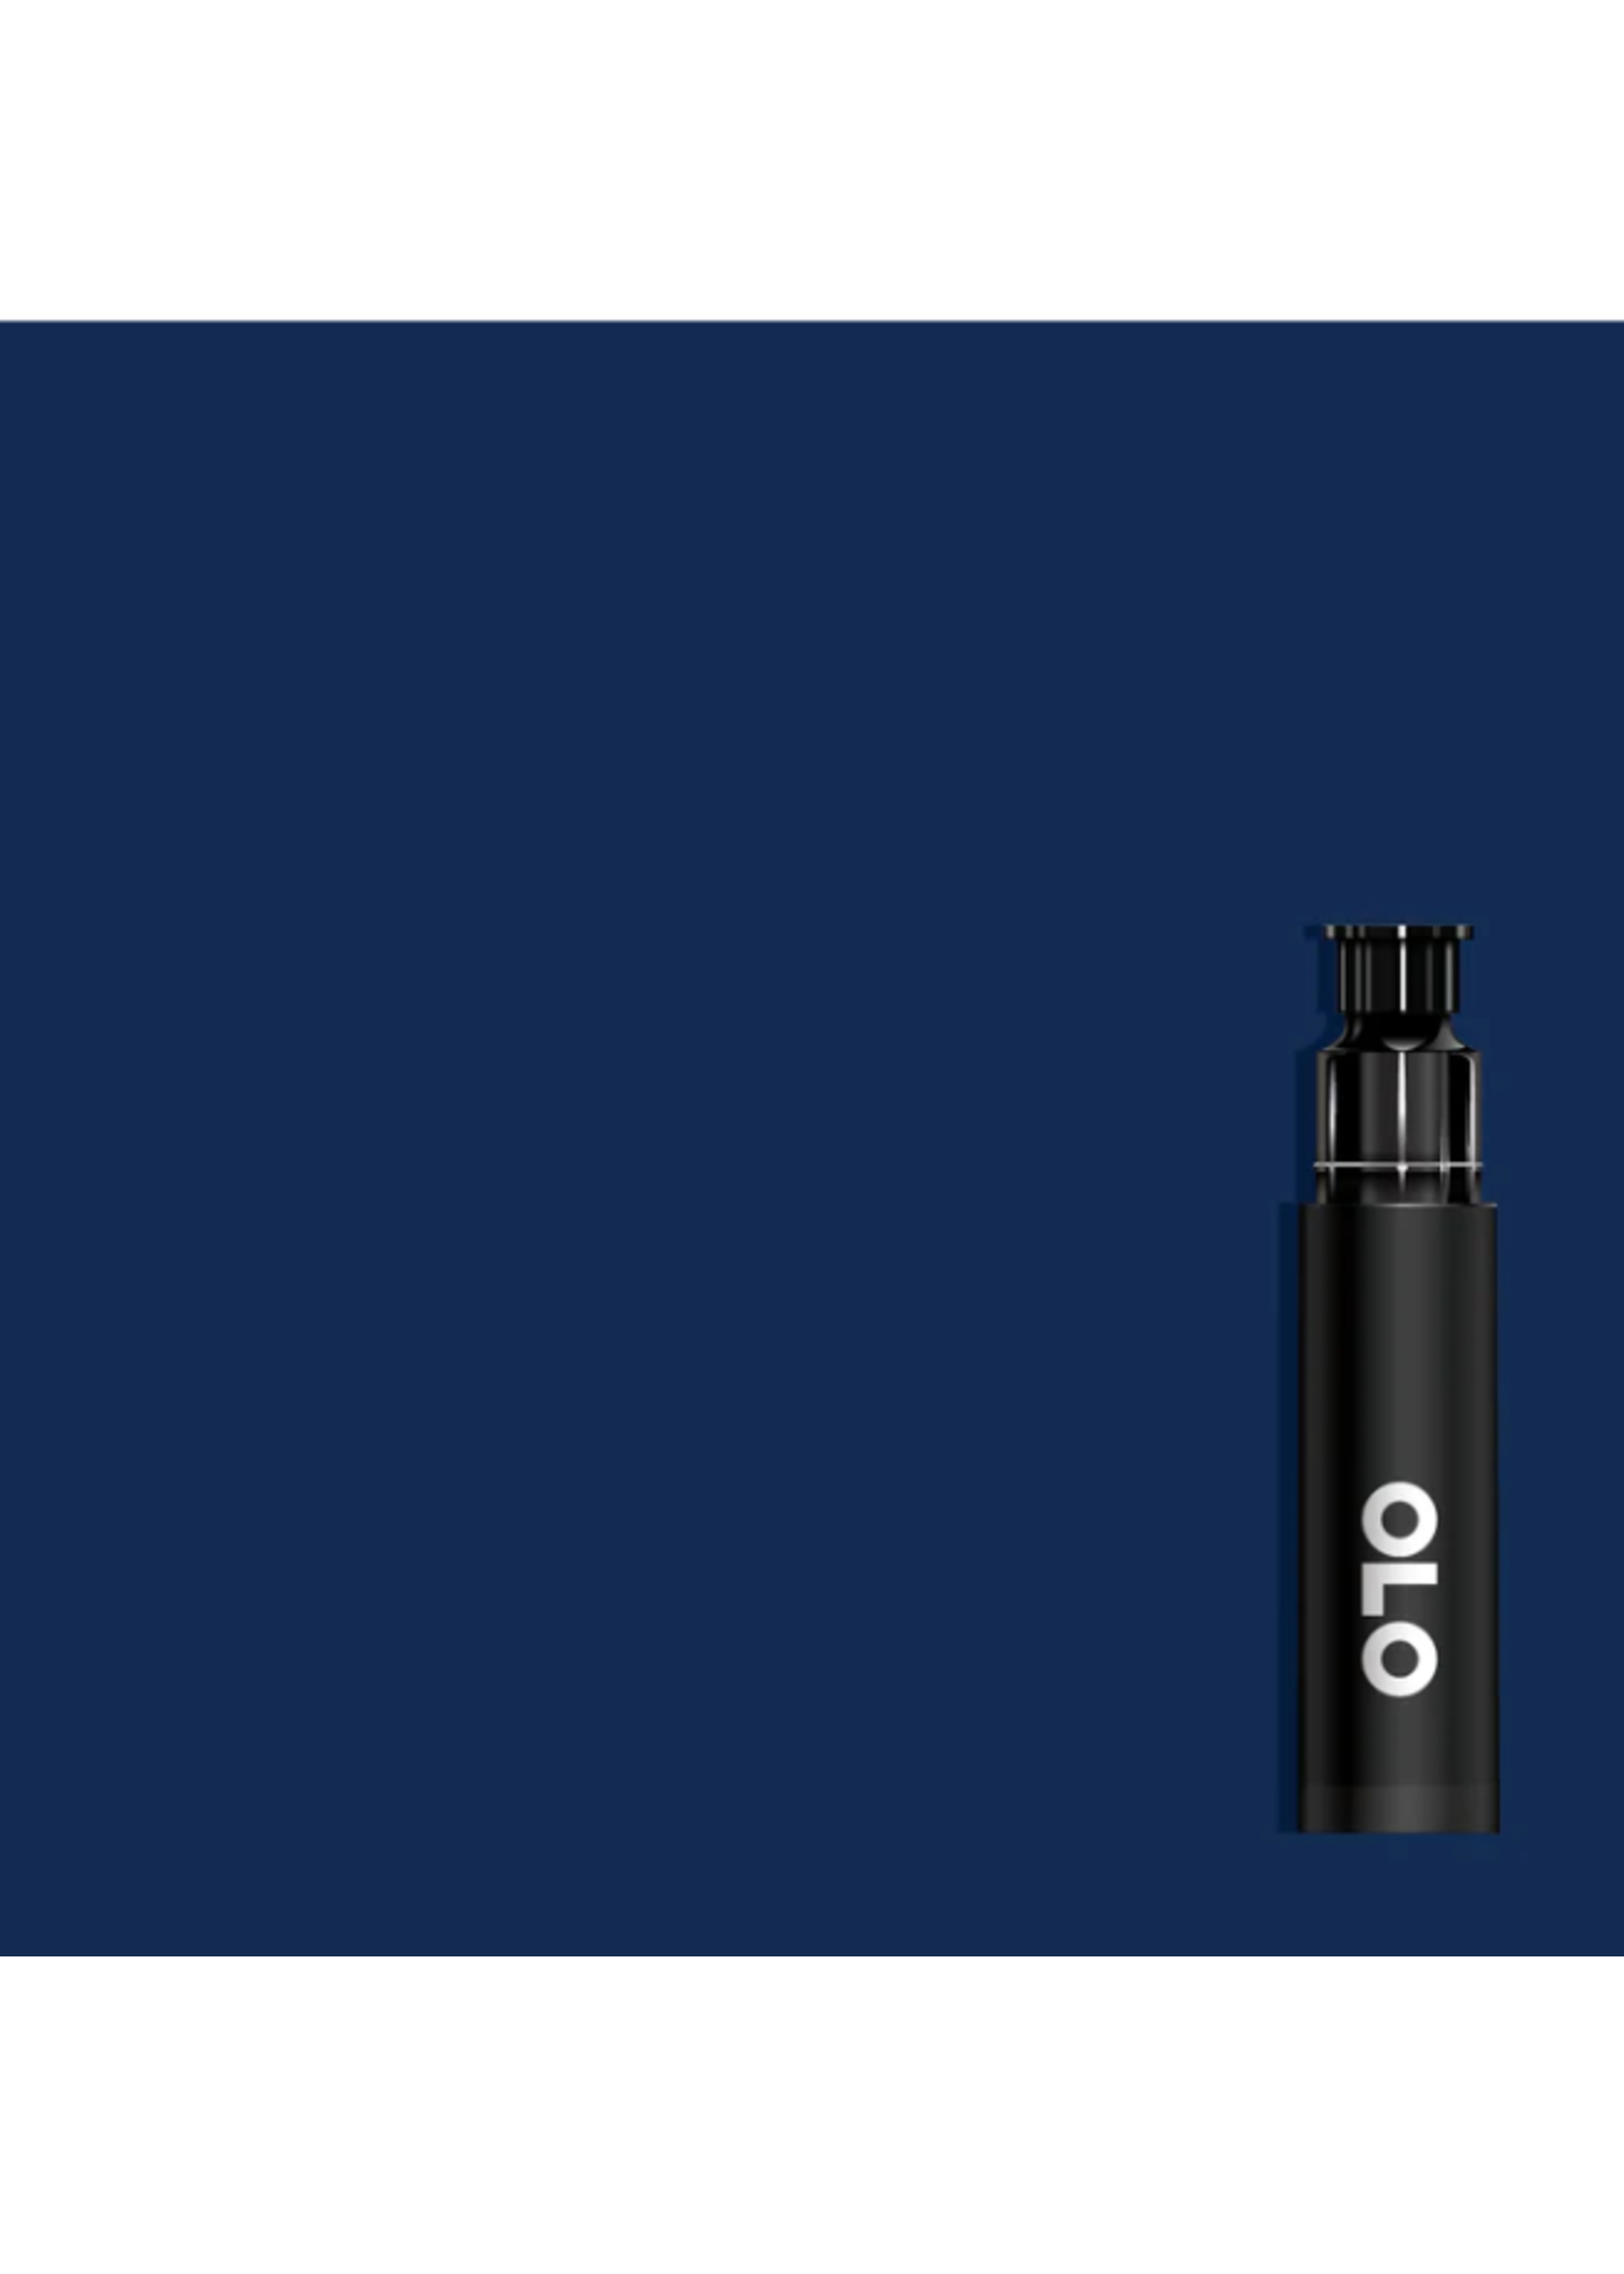 OLO OLO Brush Replacement Cartridge: Ultramarine